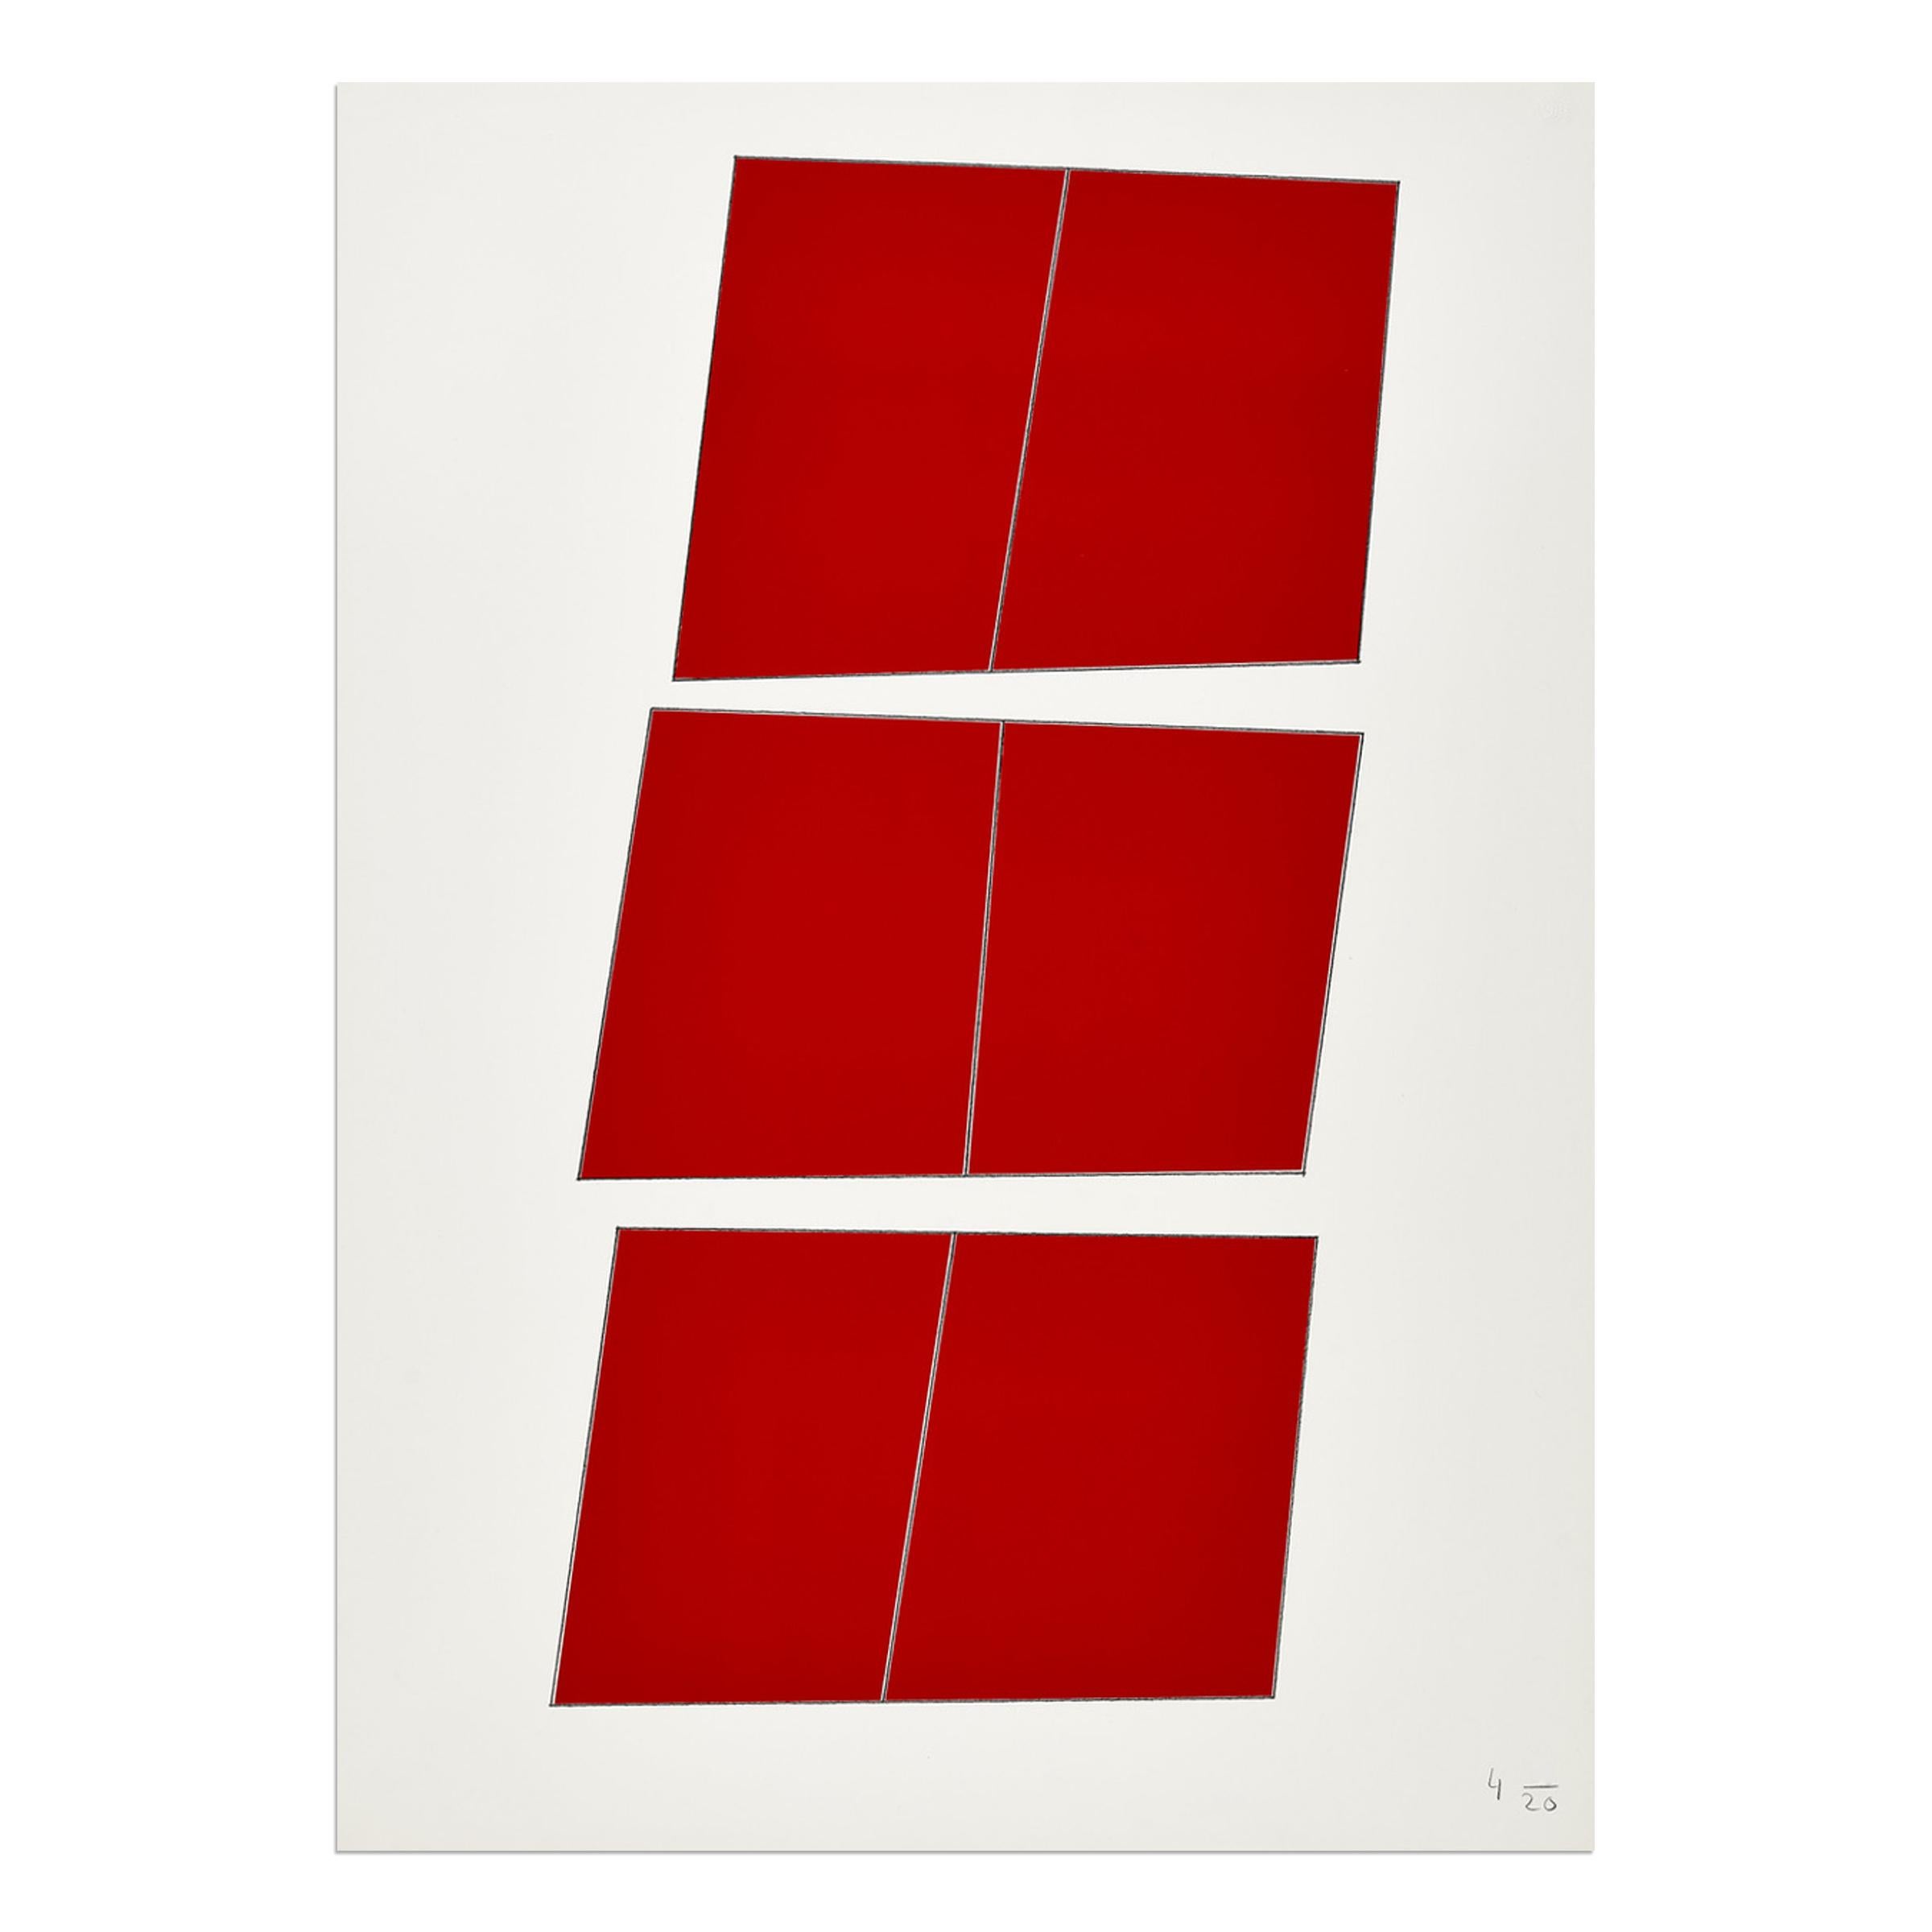 Imi Knoebel, Rote Konstellation - Suite of 6 Prints, Abstract Art, Minimalism For Sale 4